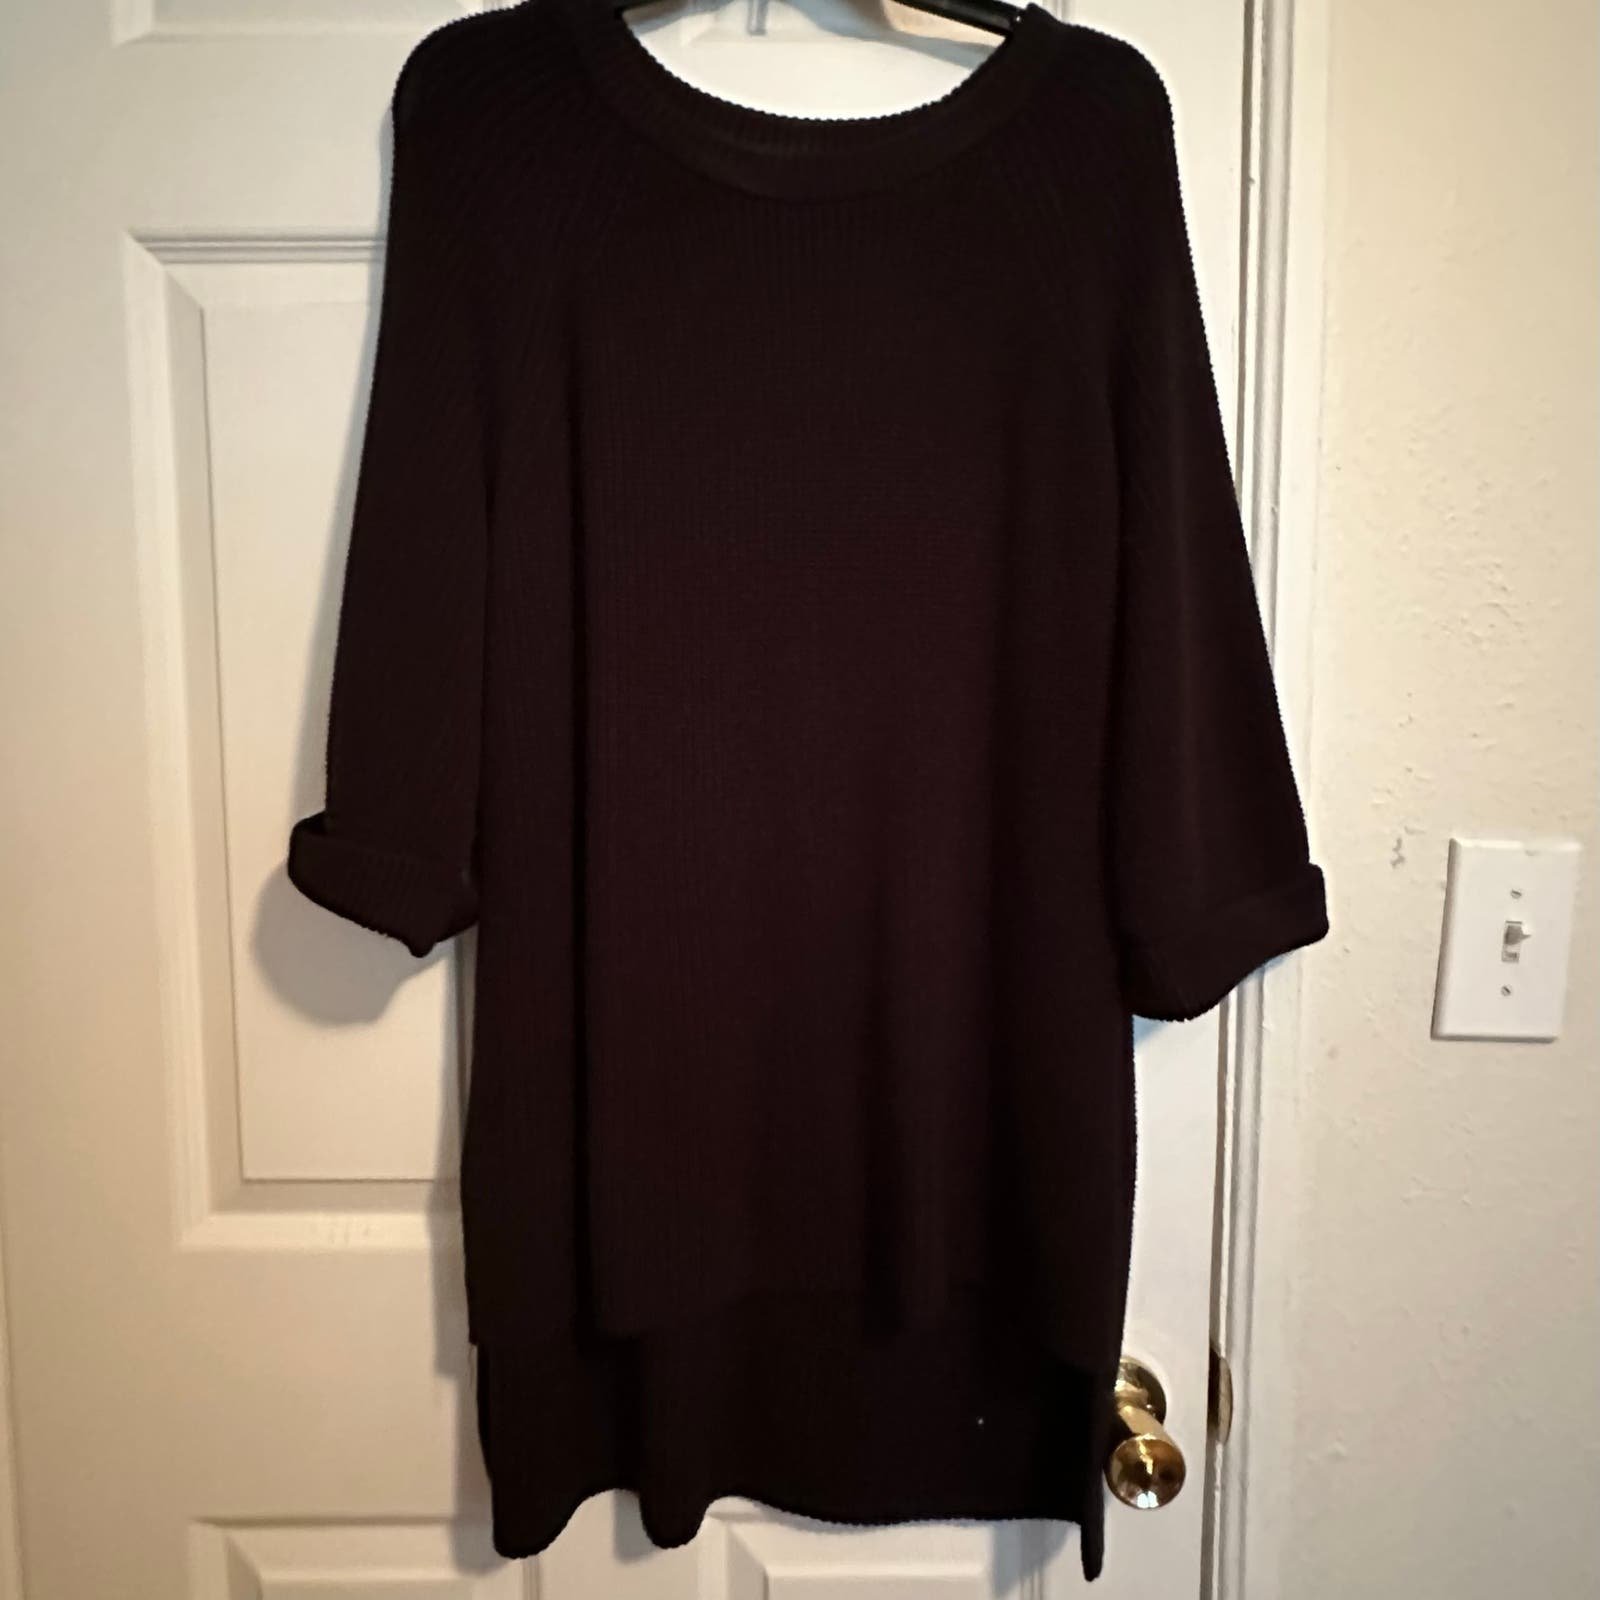 Discounted Mote black 3/4 cuffed Sleeve sweater size La